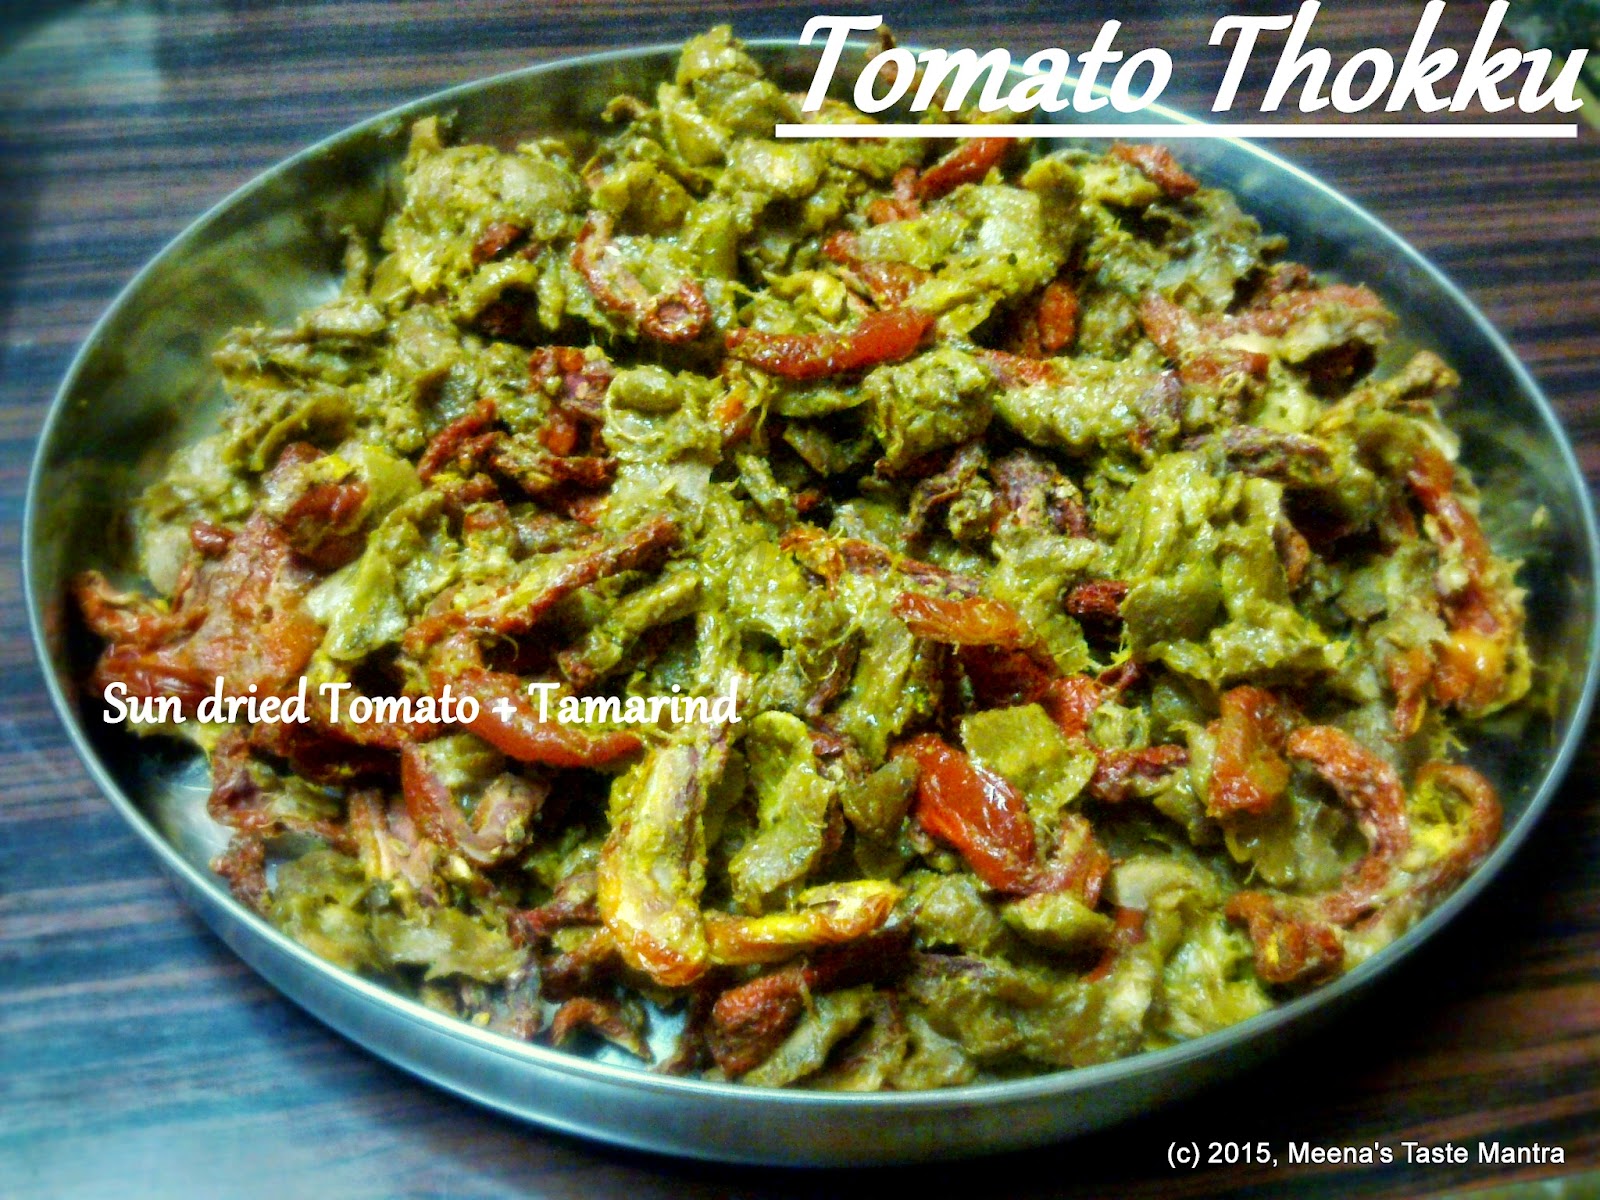 Tomato Thokku - Sundried Tomaotes mixed with Tamarind